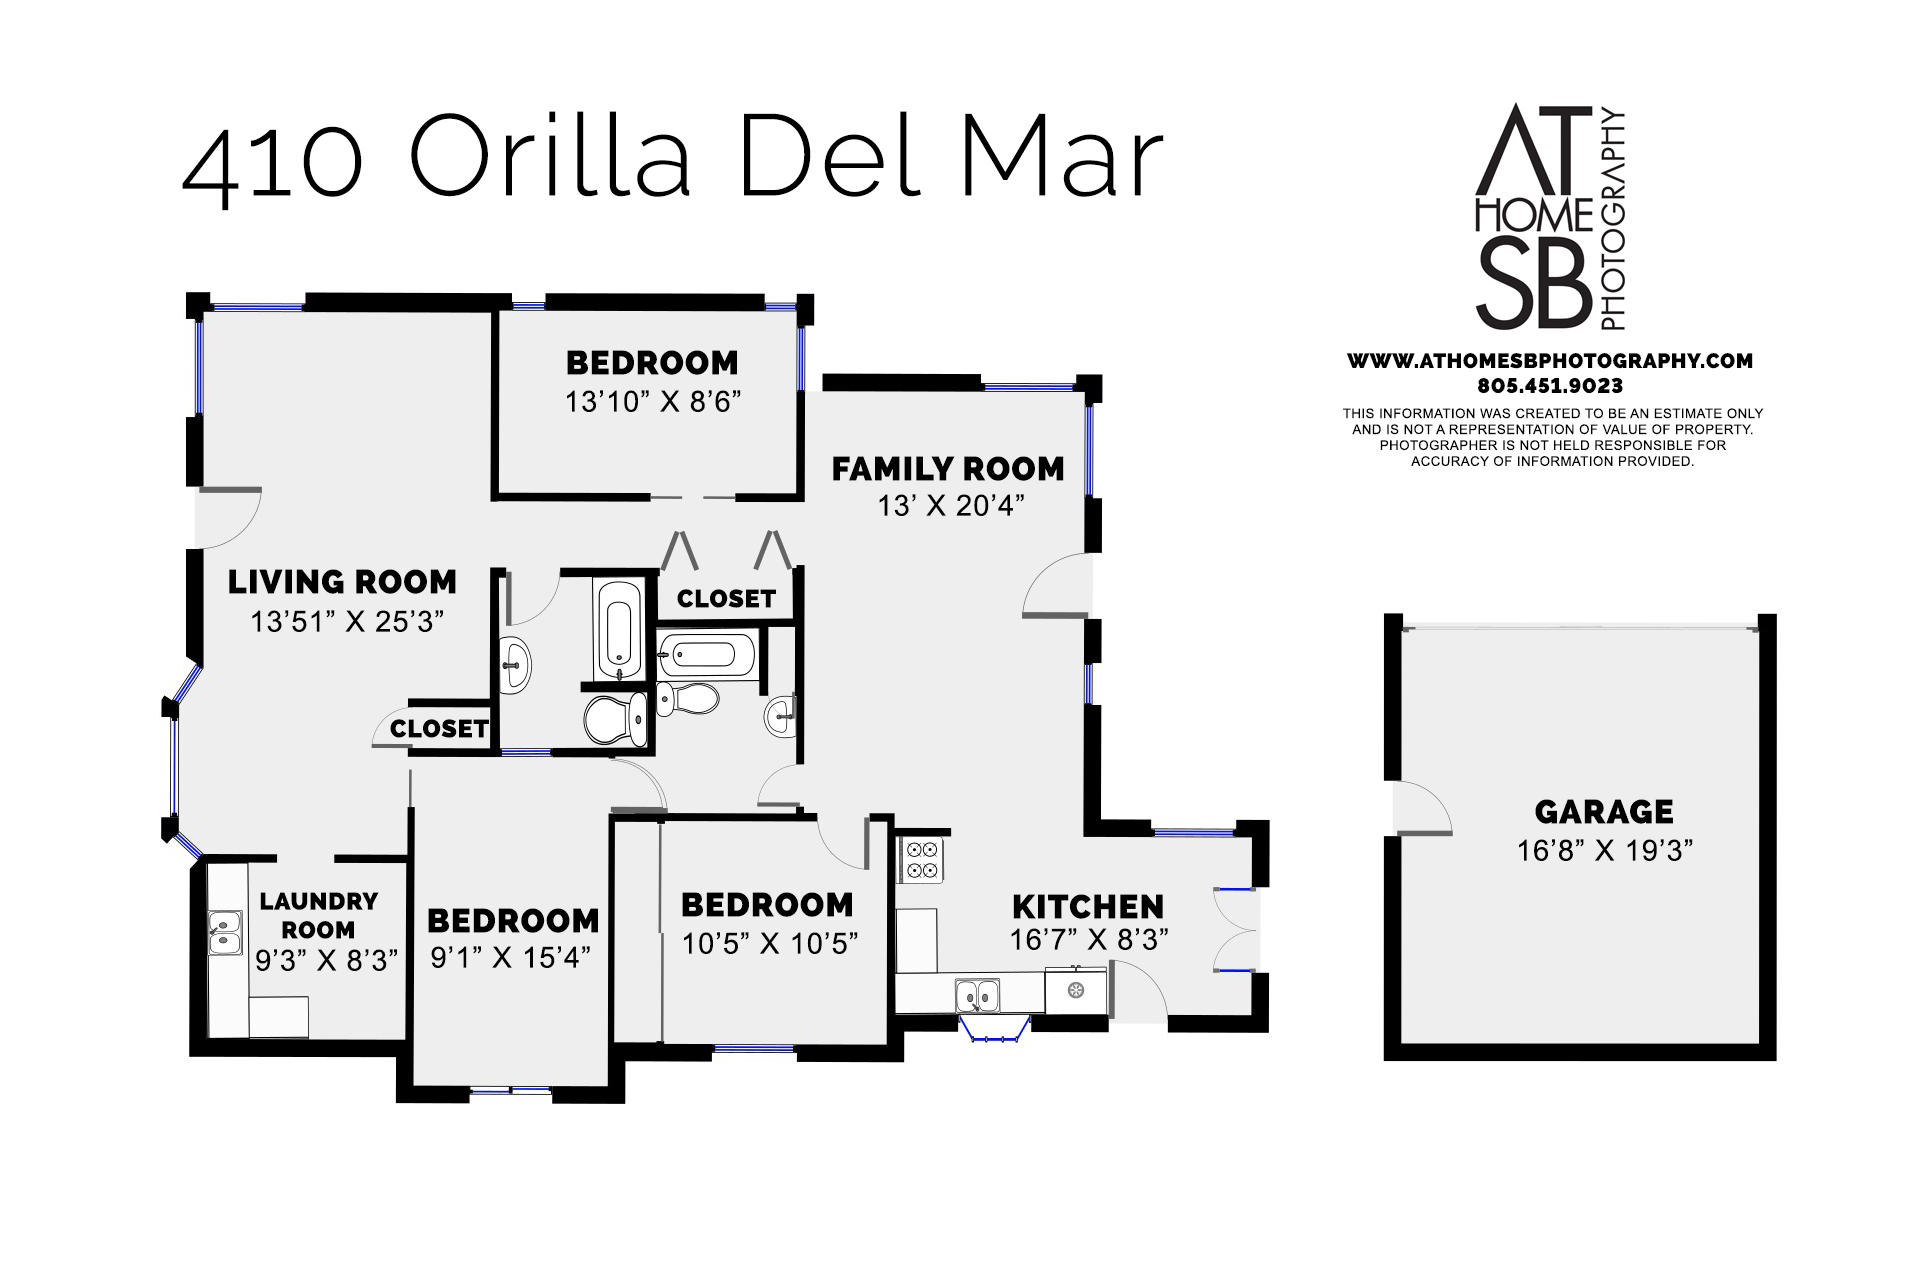 410 Orilla Del Mar-Single Family.jpg